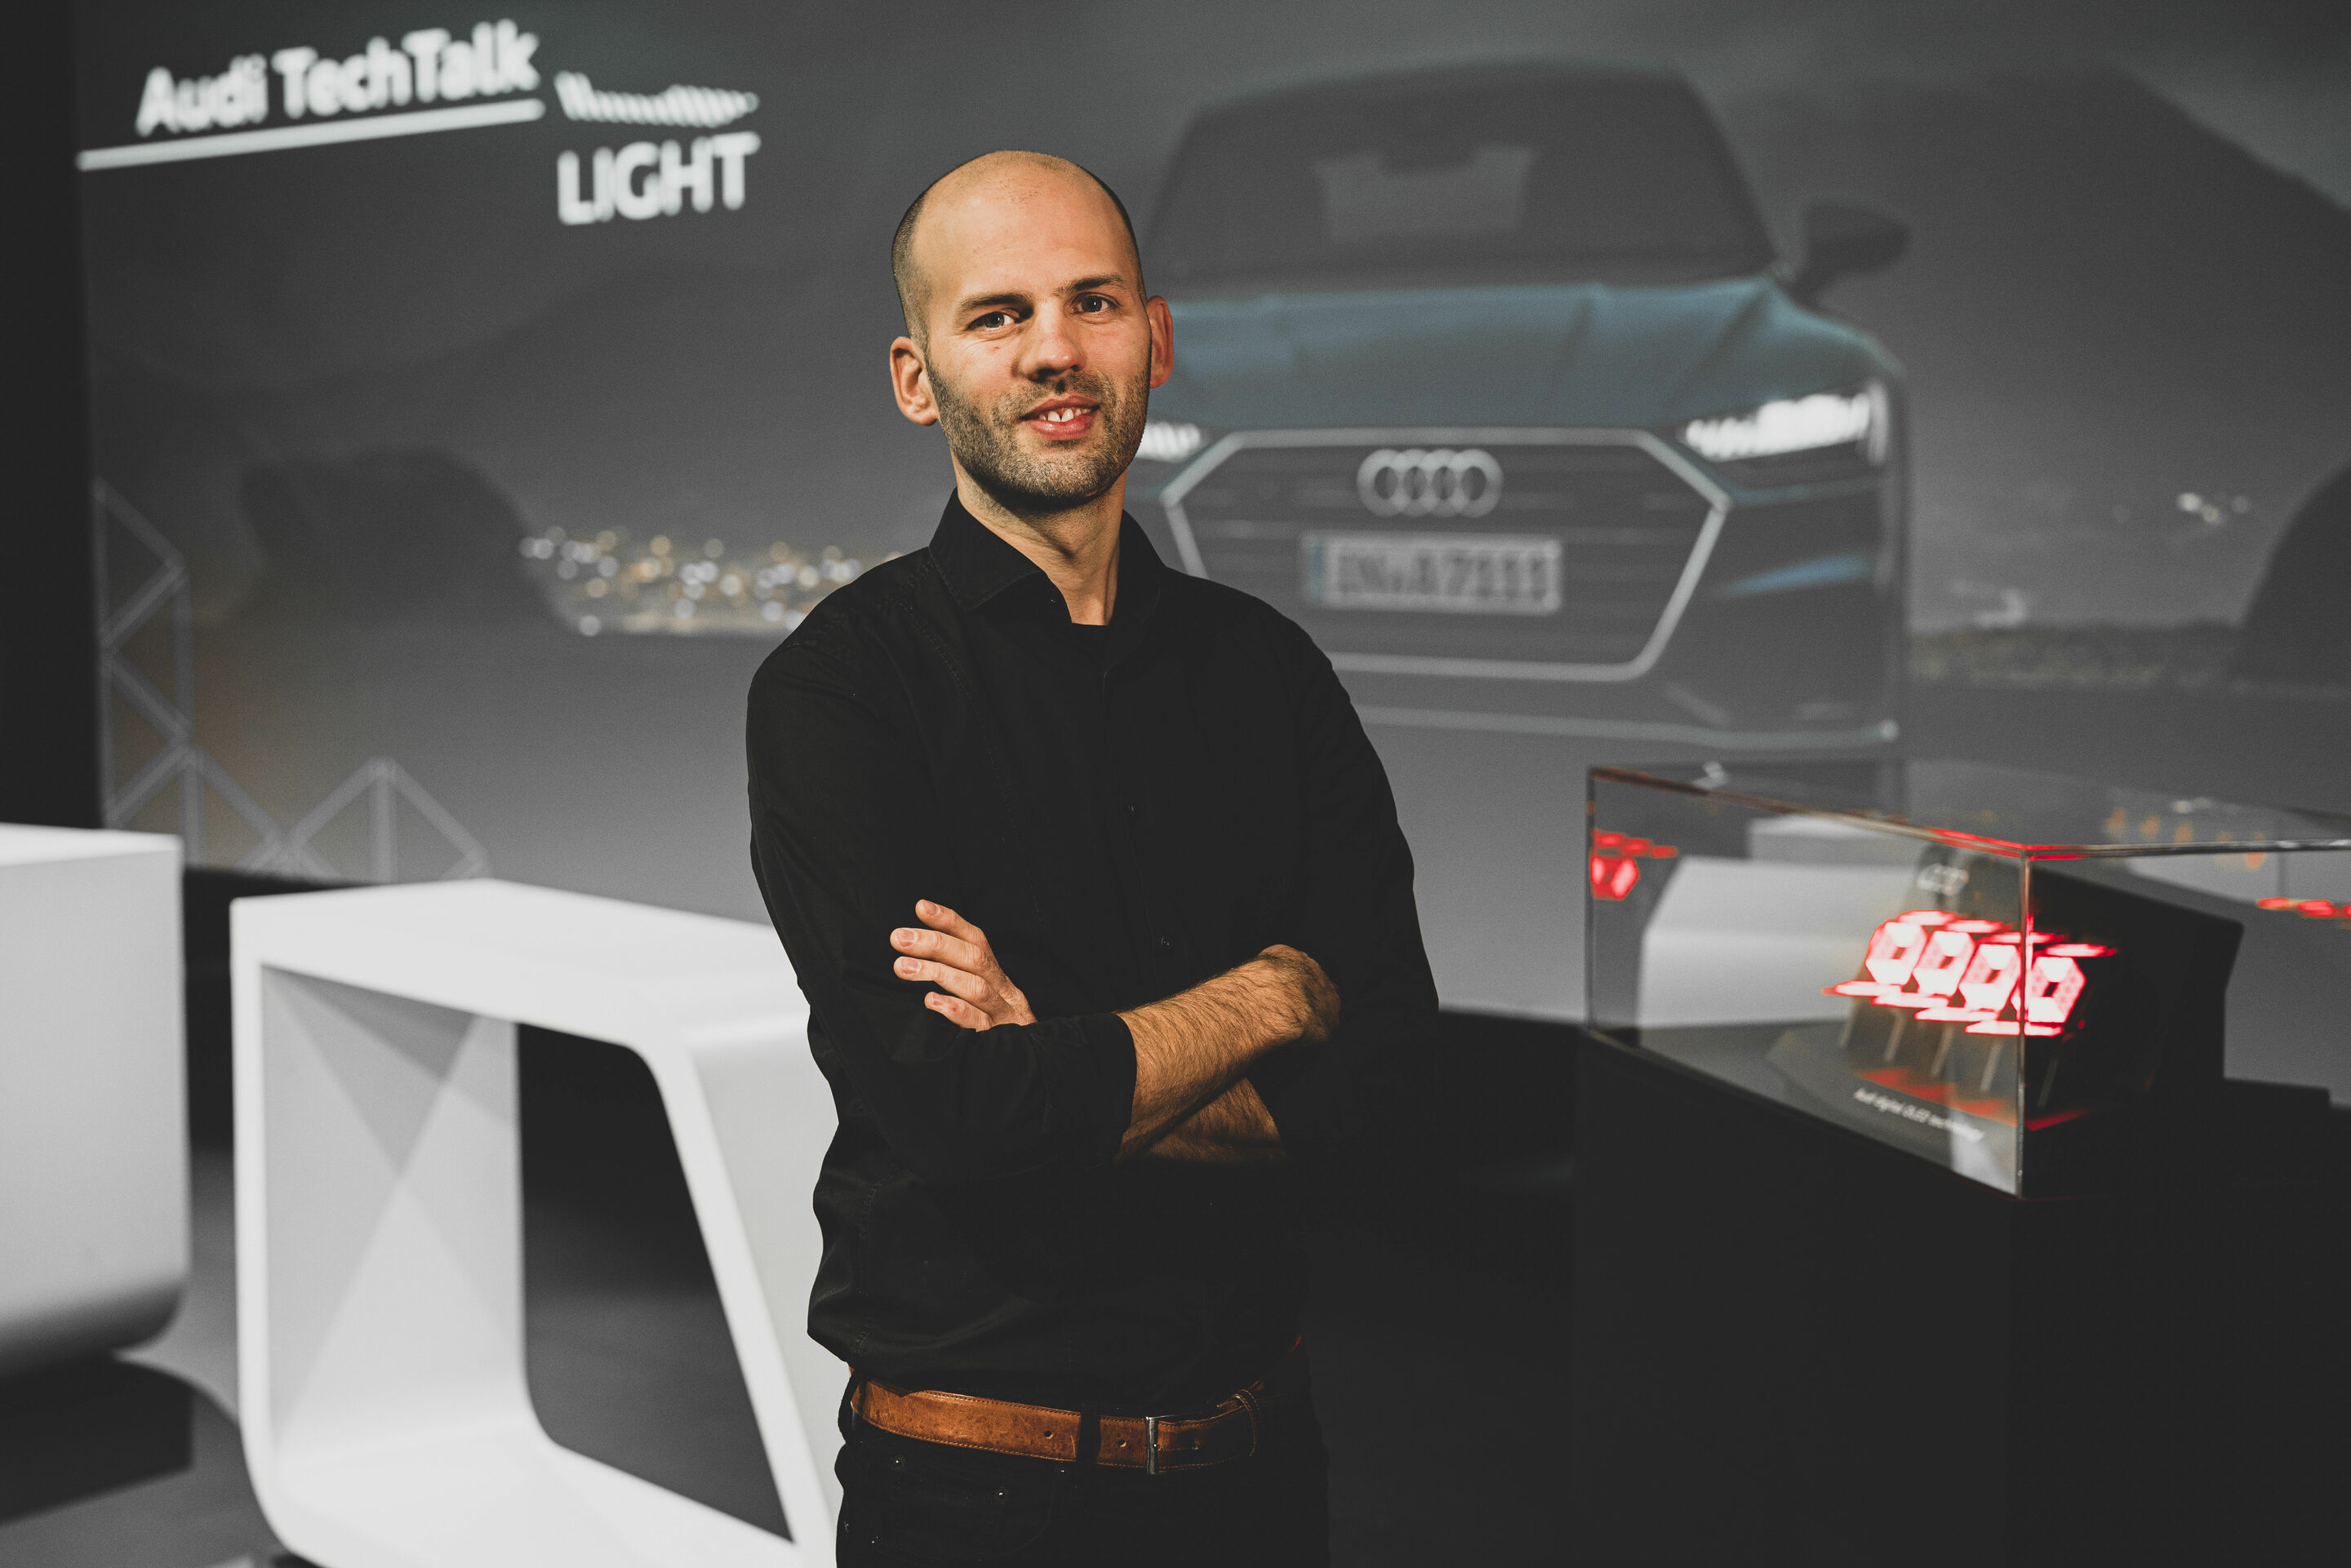 Audi TechTalk: Licht